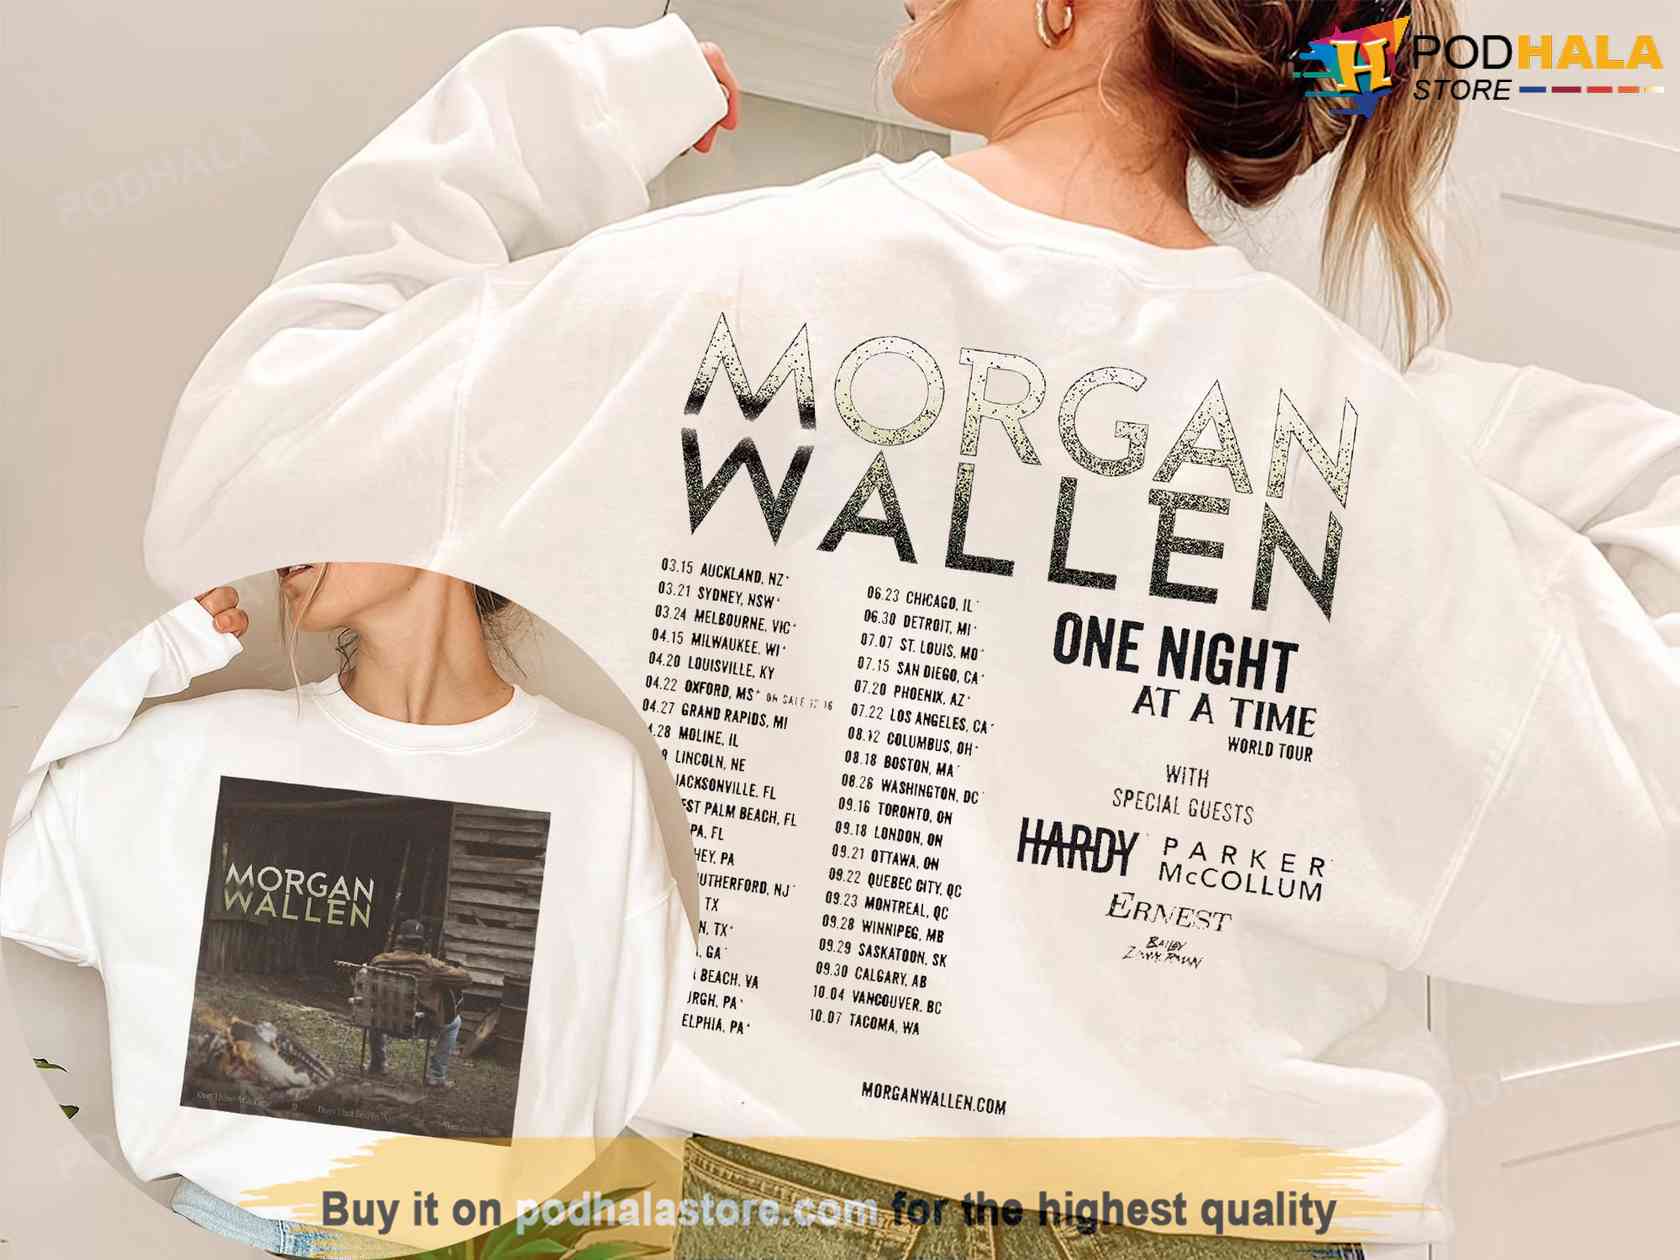 One Thing At A Time Album Shirt, Morgan Wallen Shirt